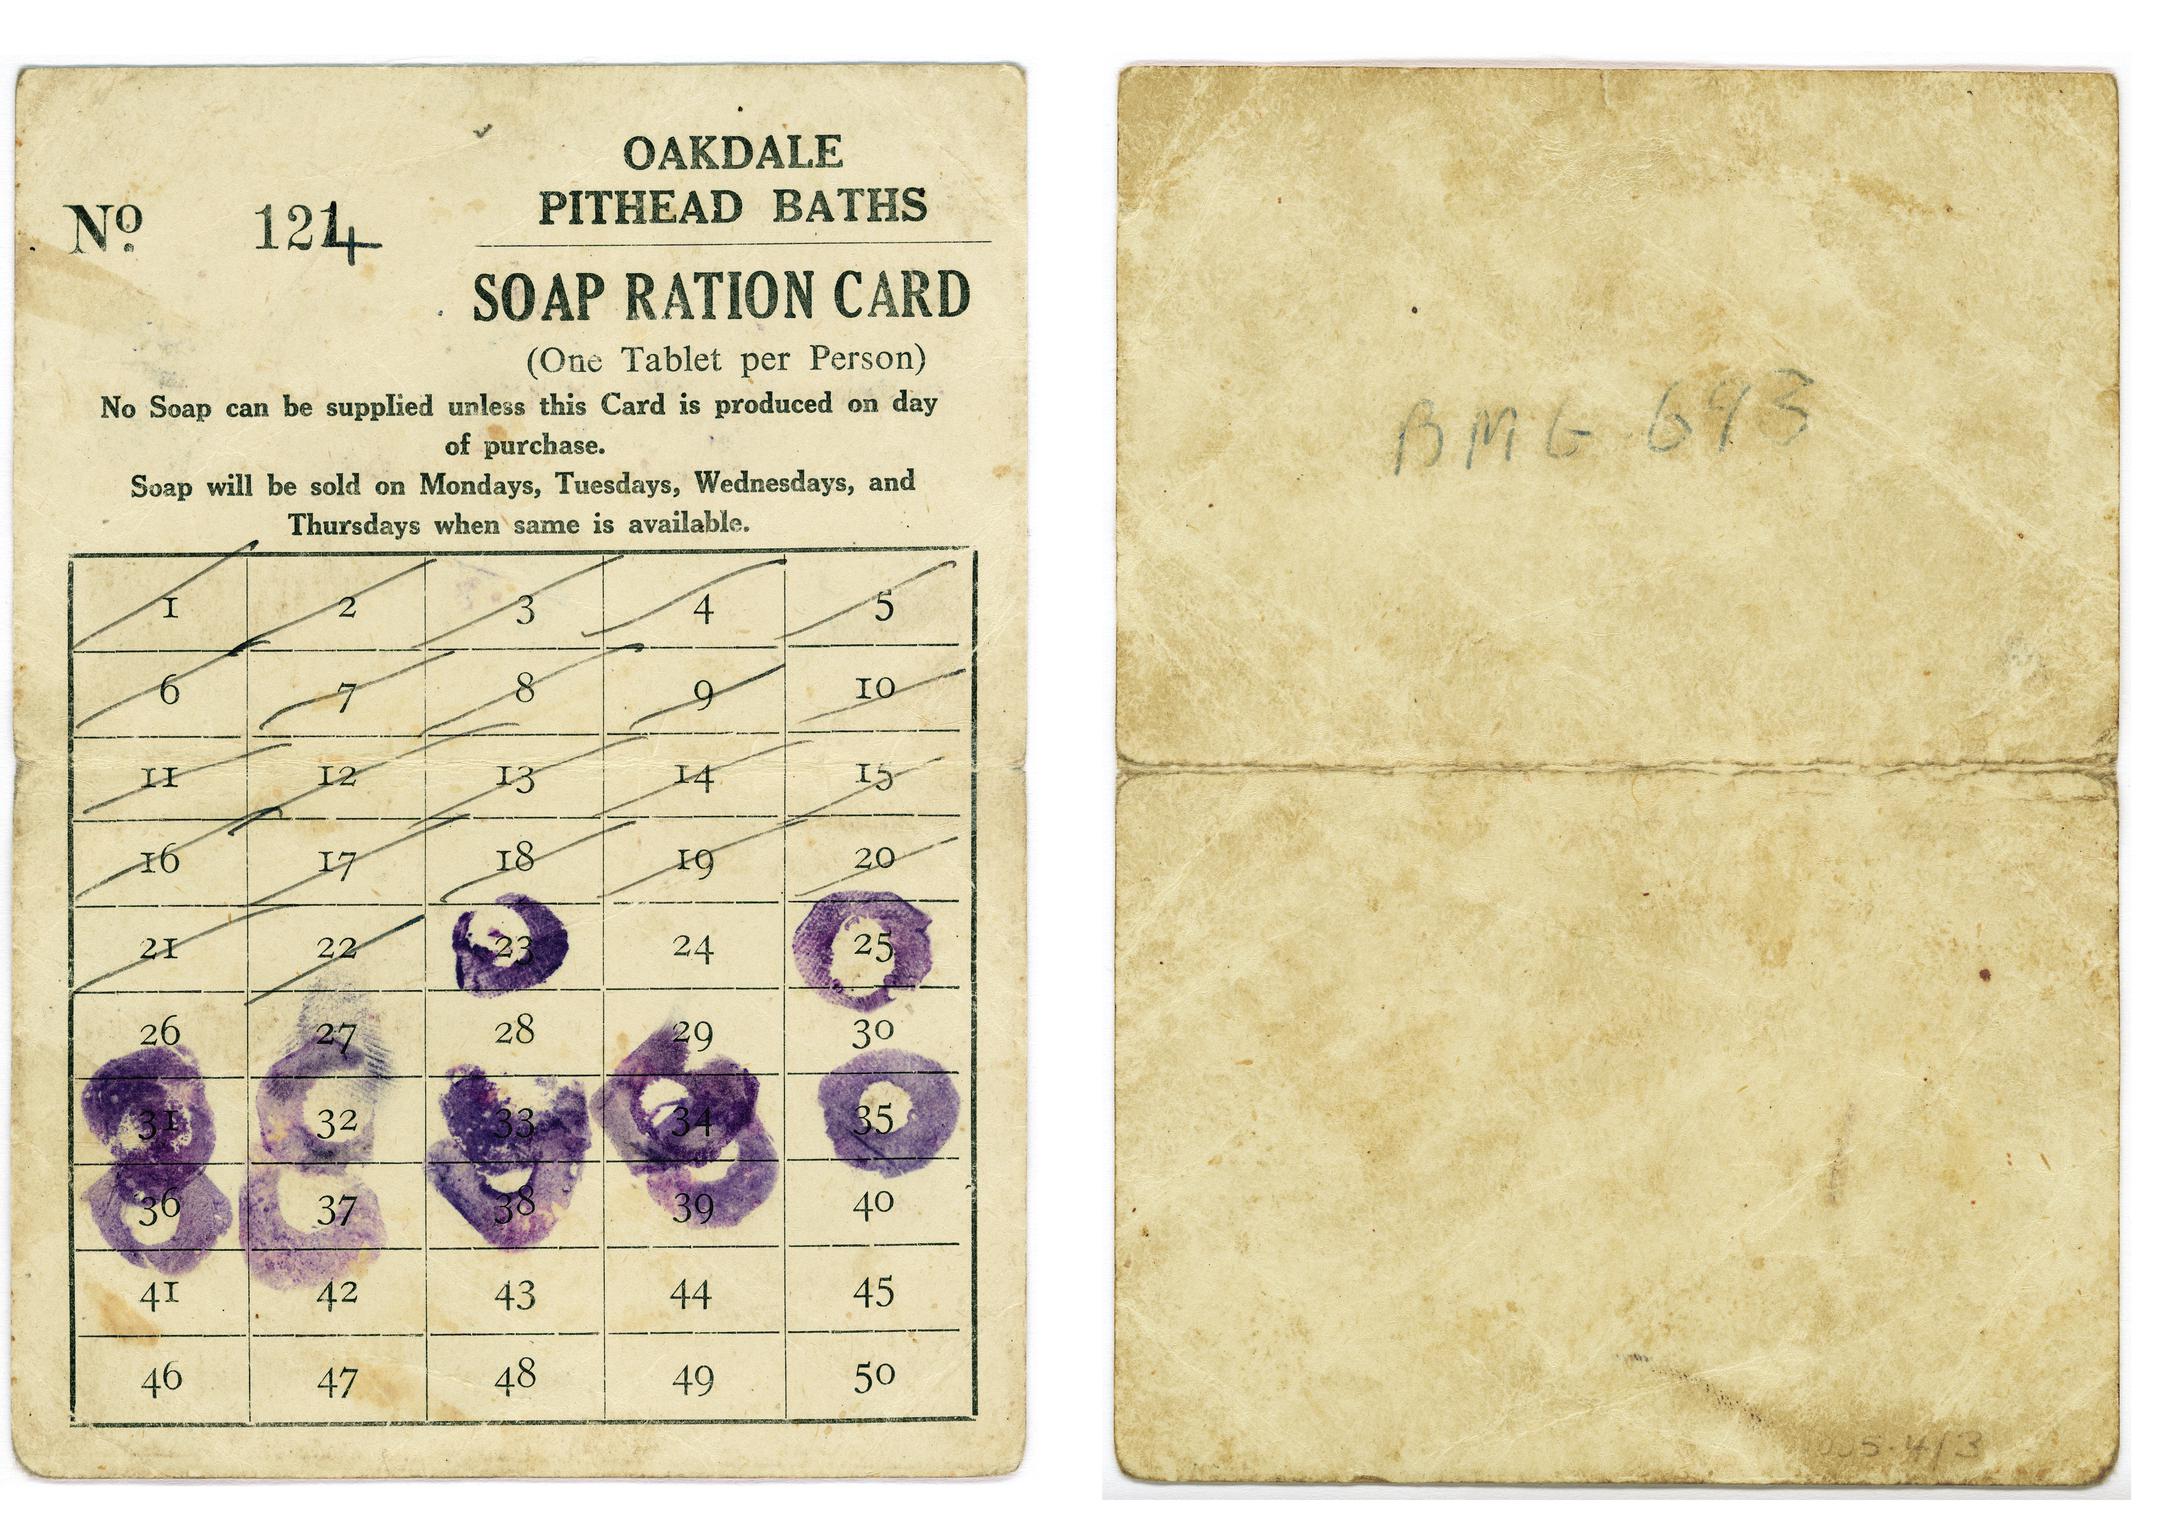 Oakdale pithead baths, soap ration card